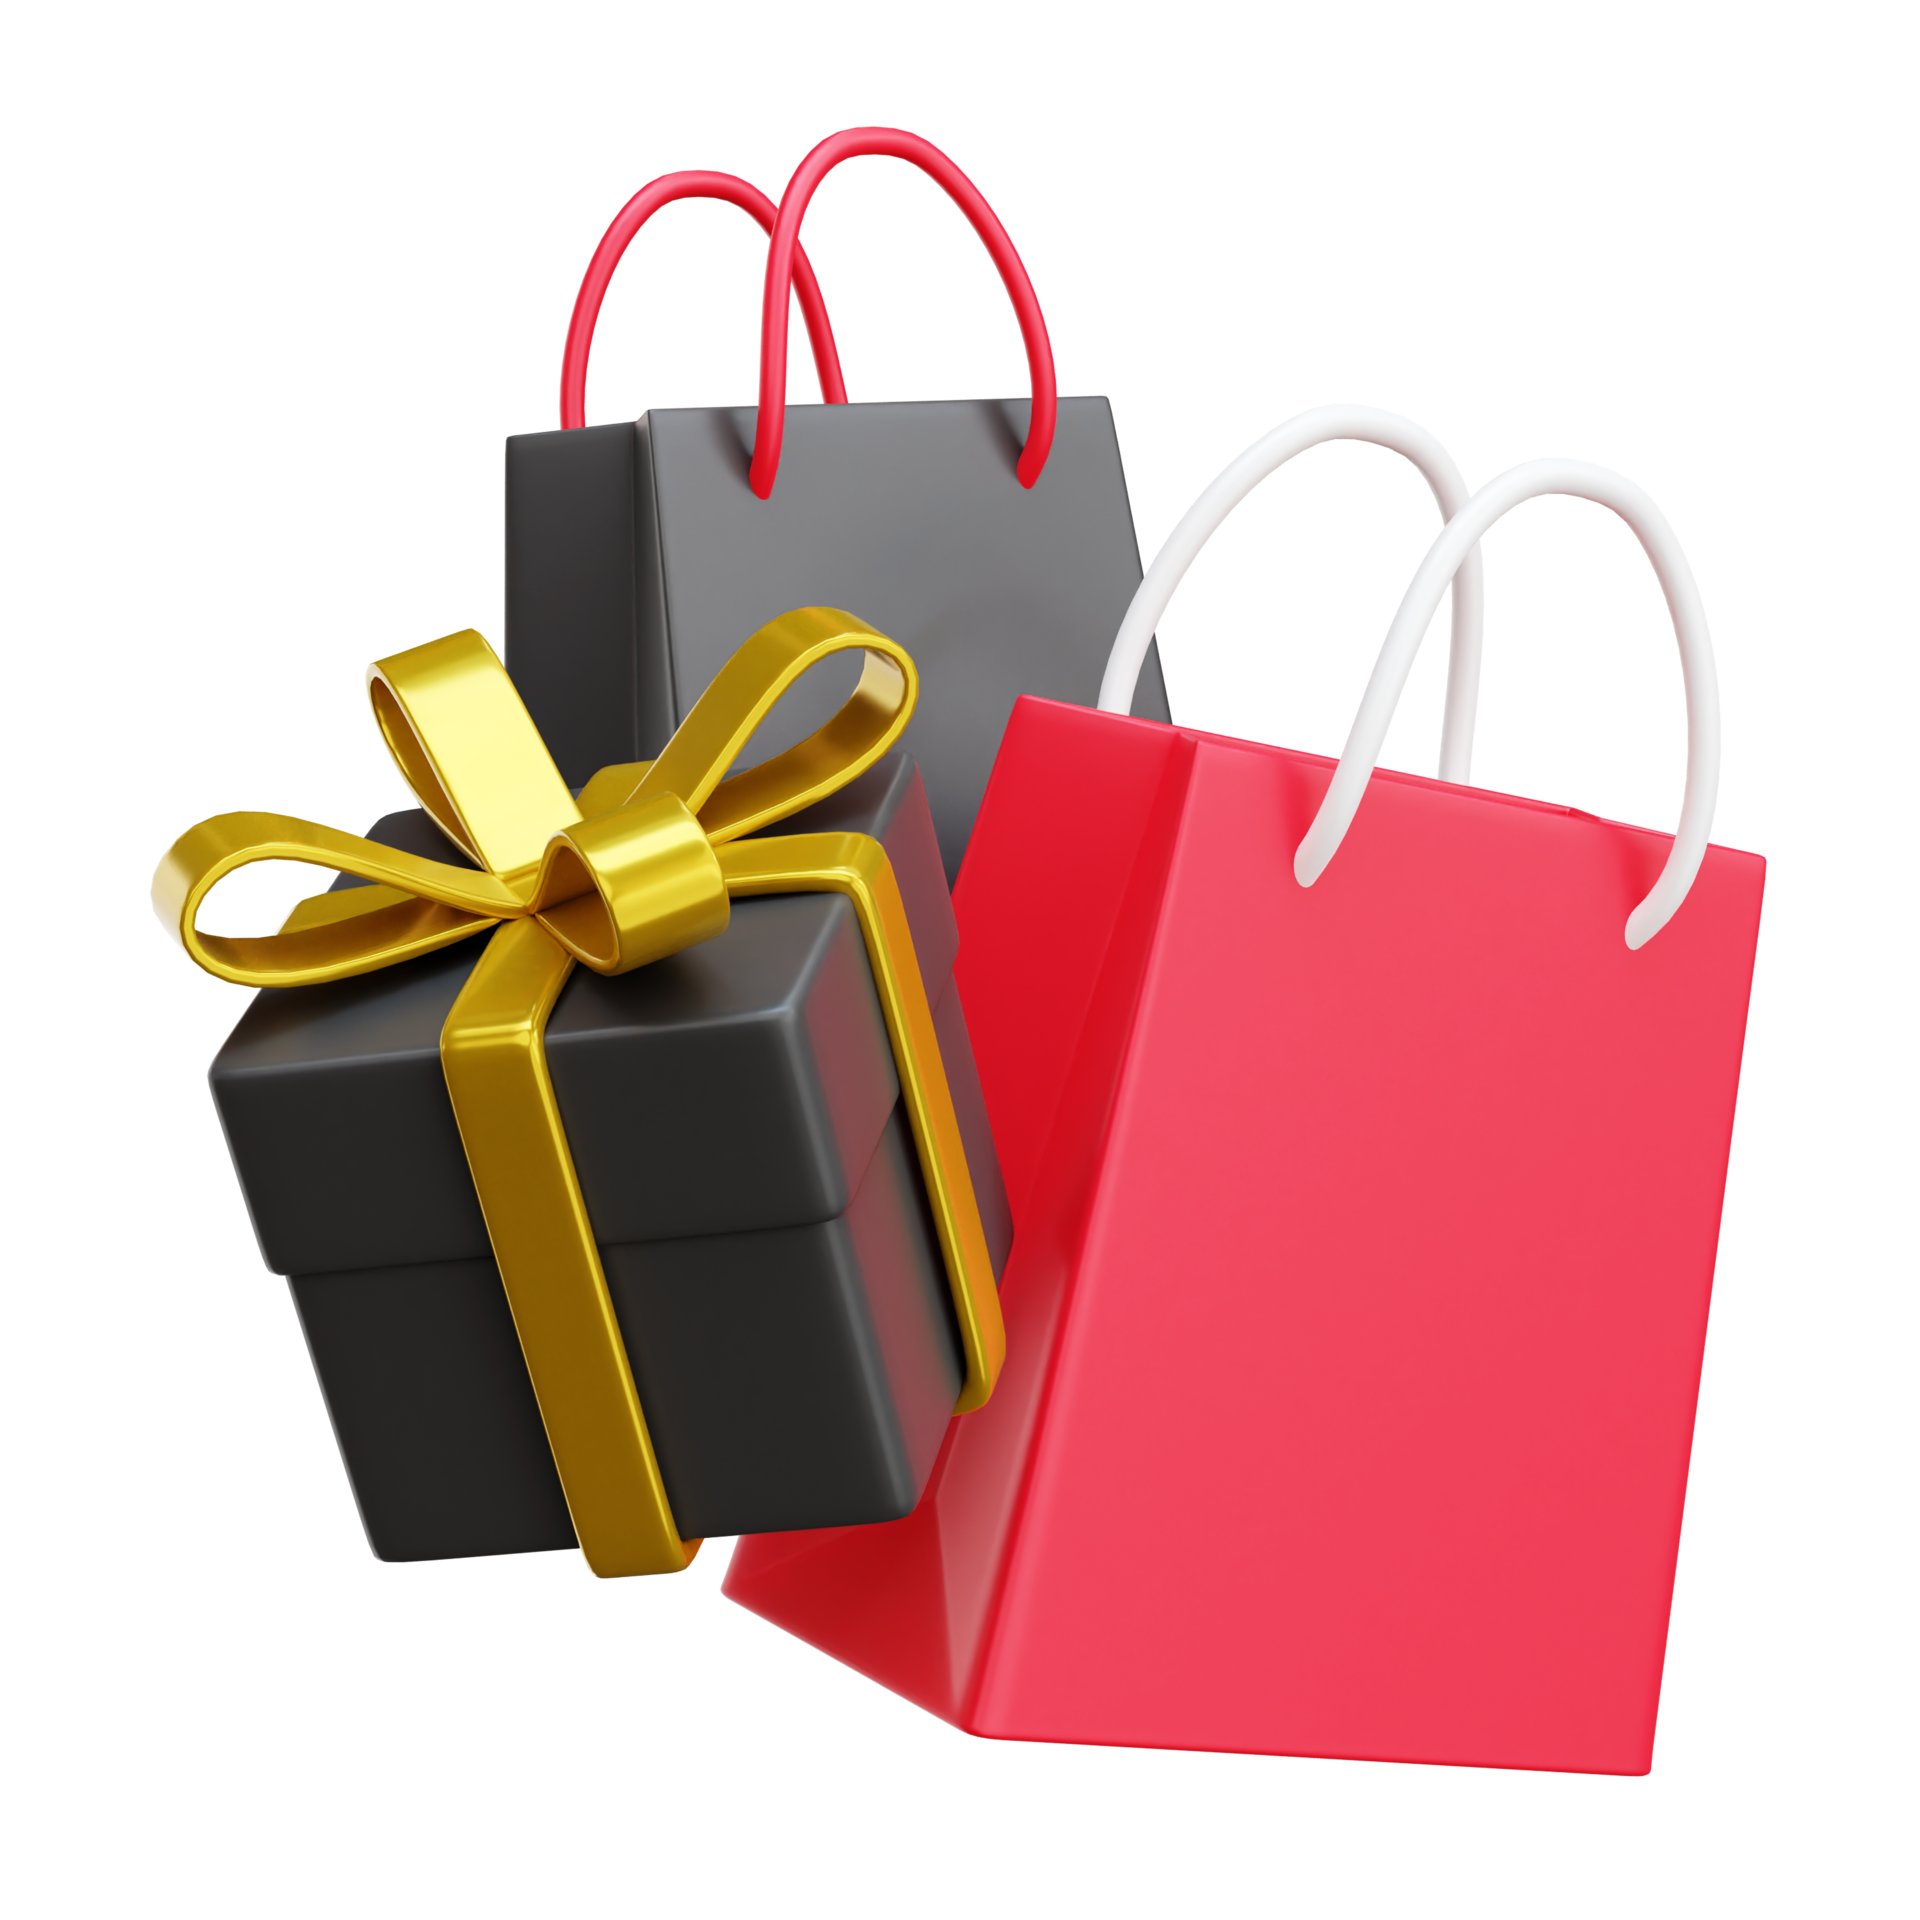 Shop Bag Clipart Vector, Shopping Bag, Bag Clipart, Gift Bag PNG Image For  Free Download